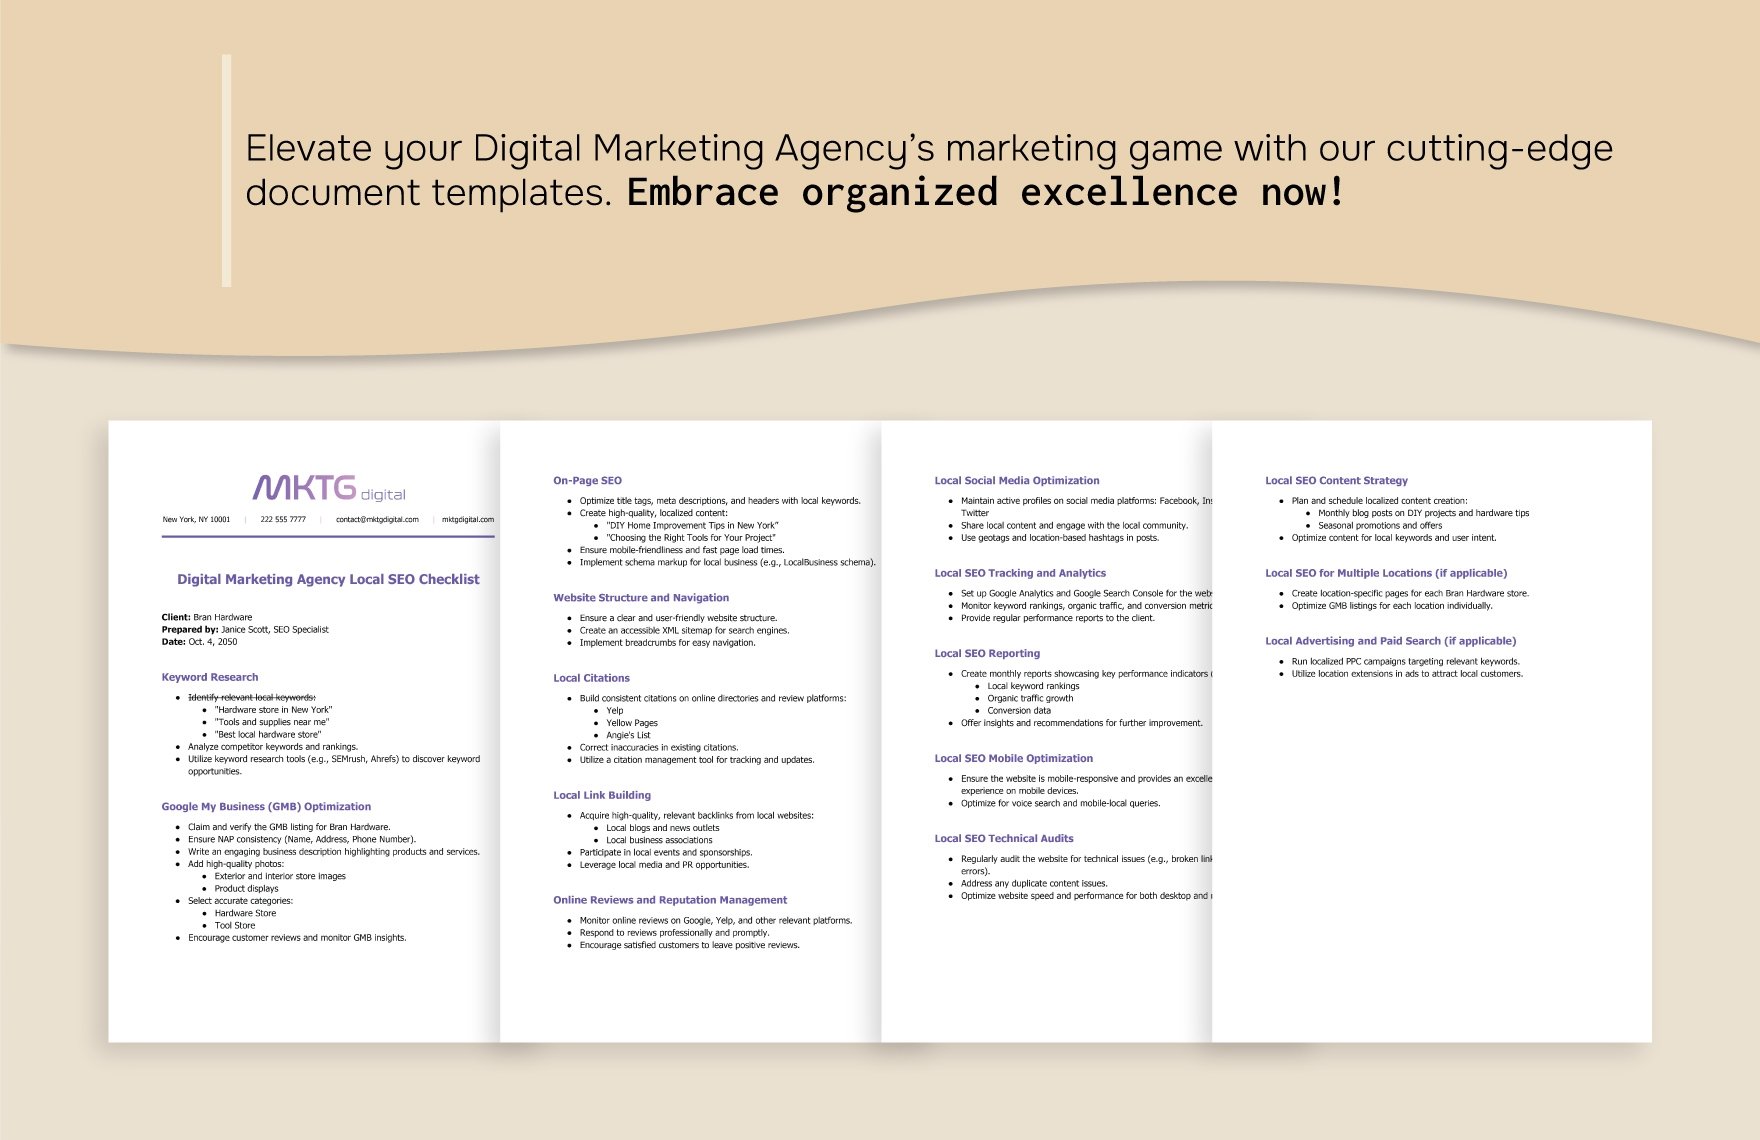 Digital Marketing Agency Local SEO Checklist Template